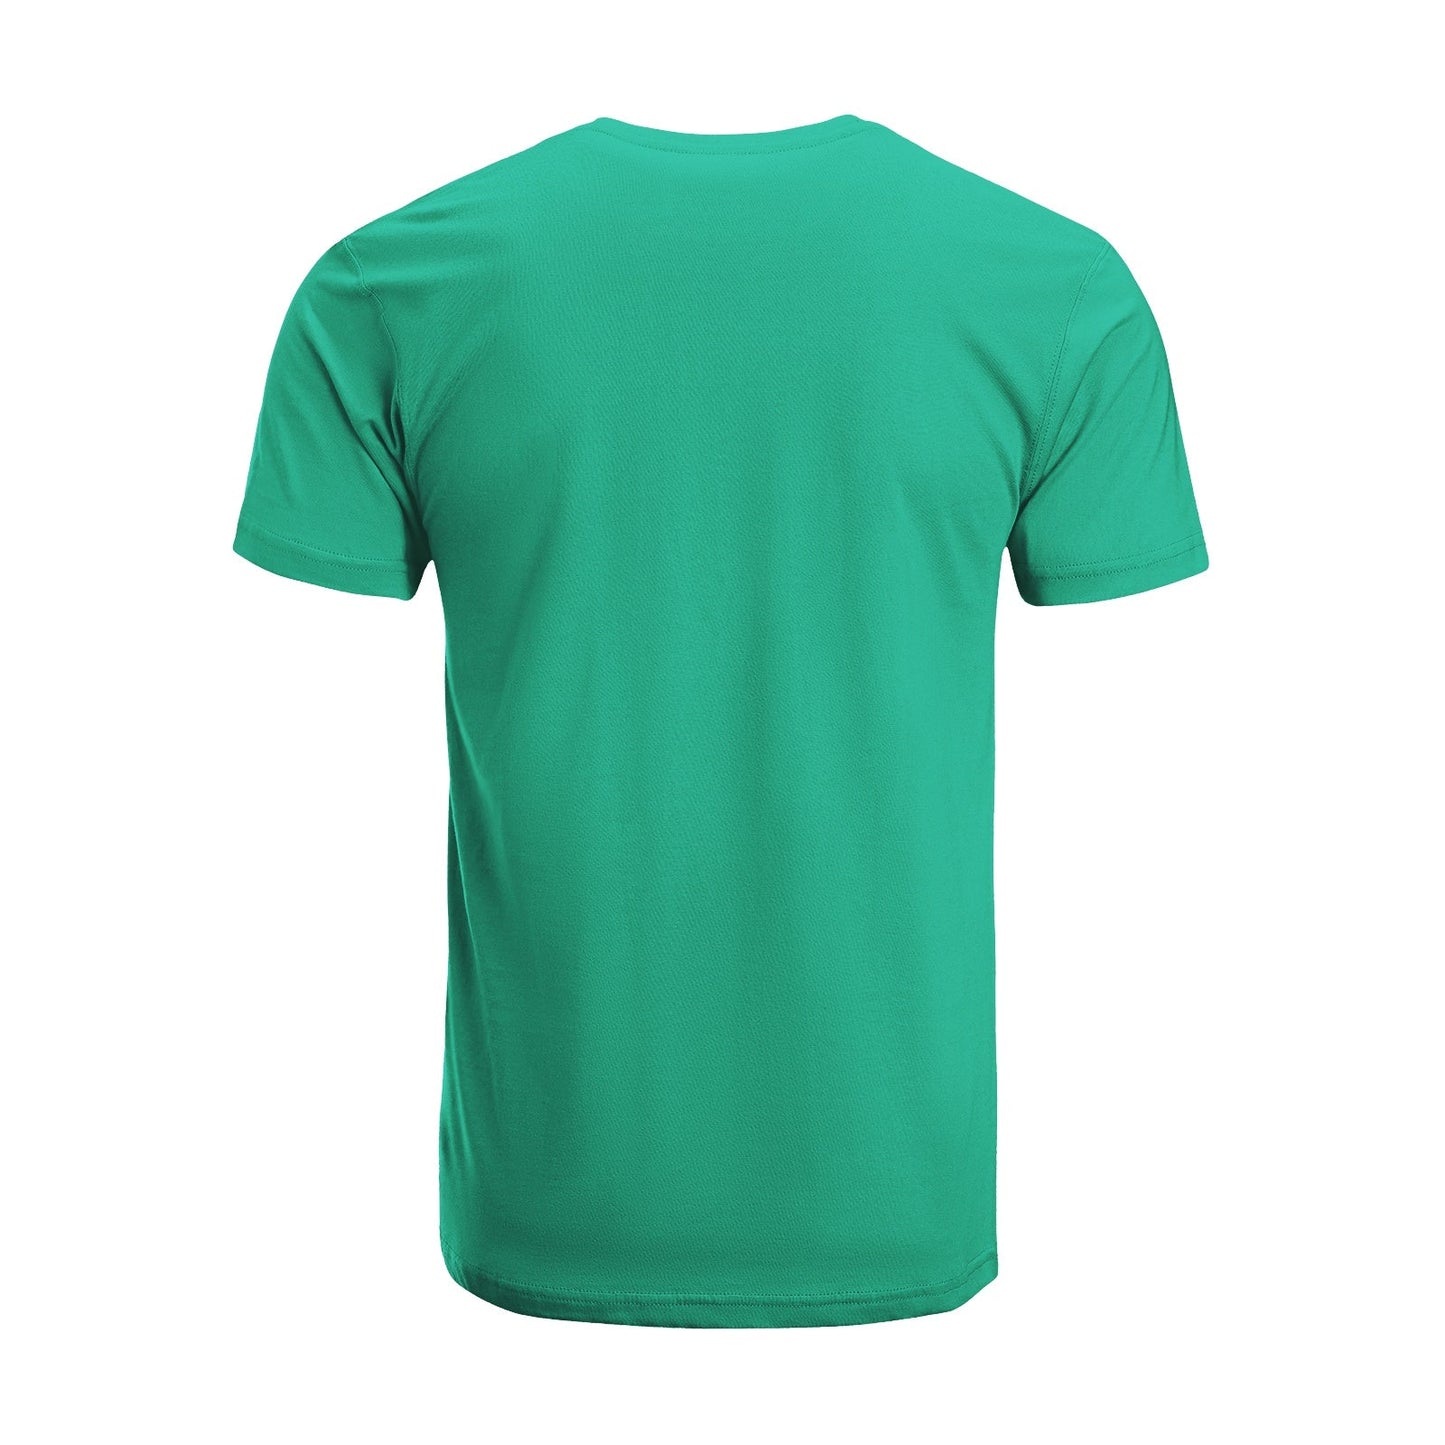 Unisex Short Sleeve Crew Neck Cotton Jersey T-Shirt VEGAN 06